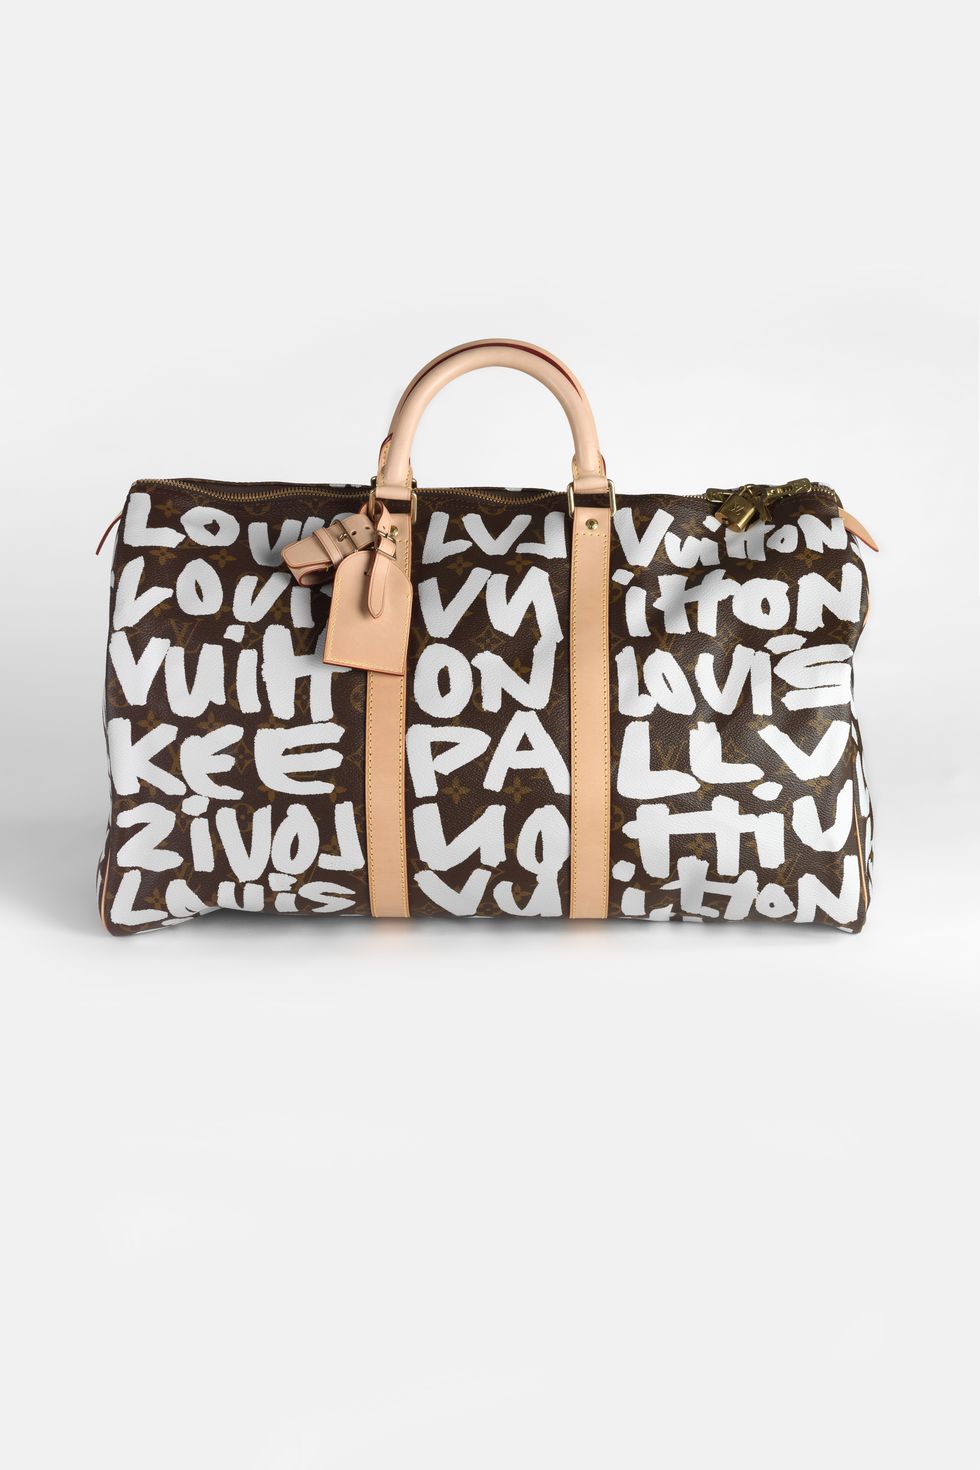 Louis Vuitton 2001 Handbag PRINT AD Advertisement